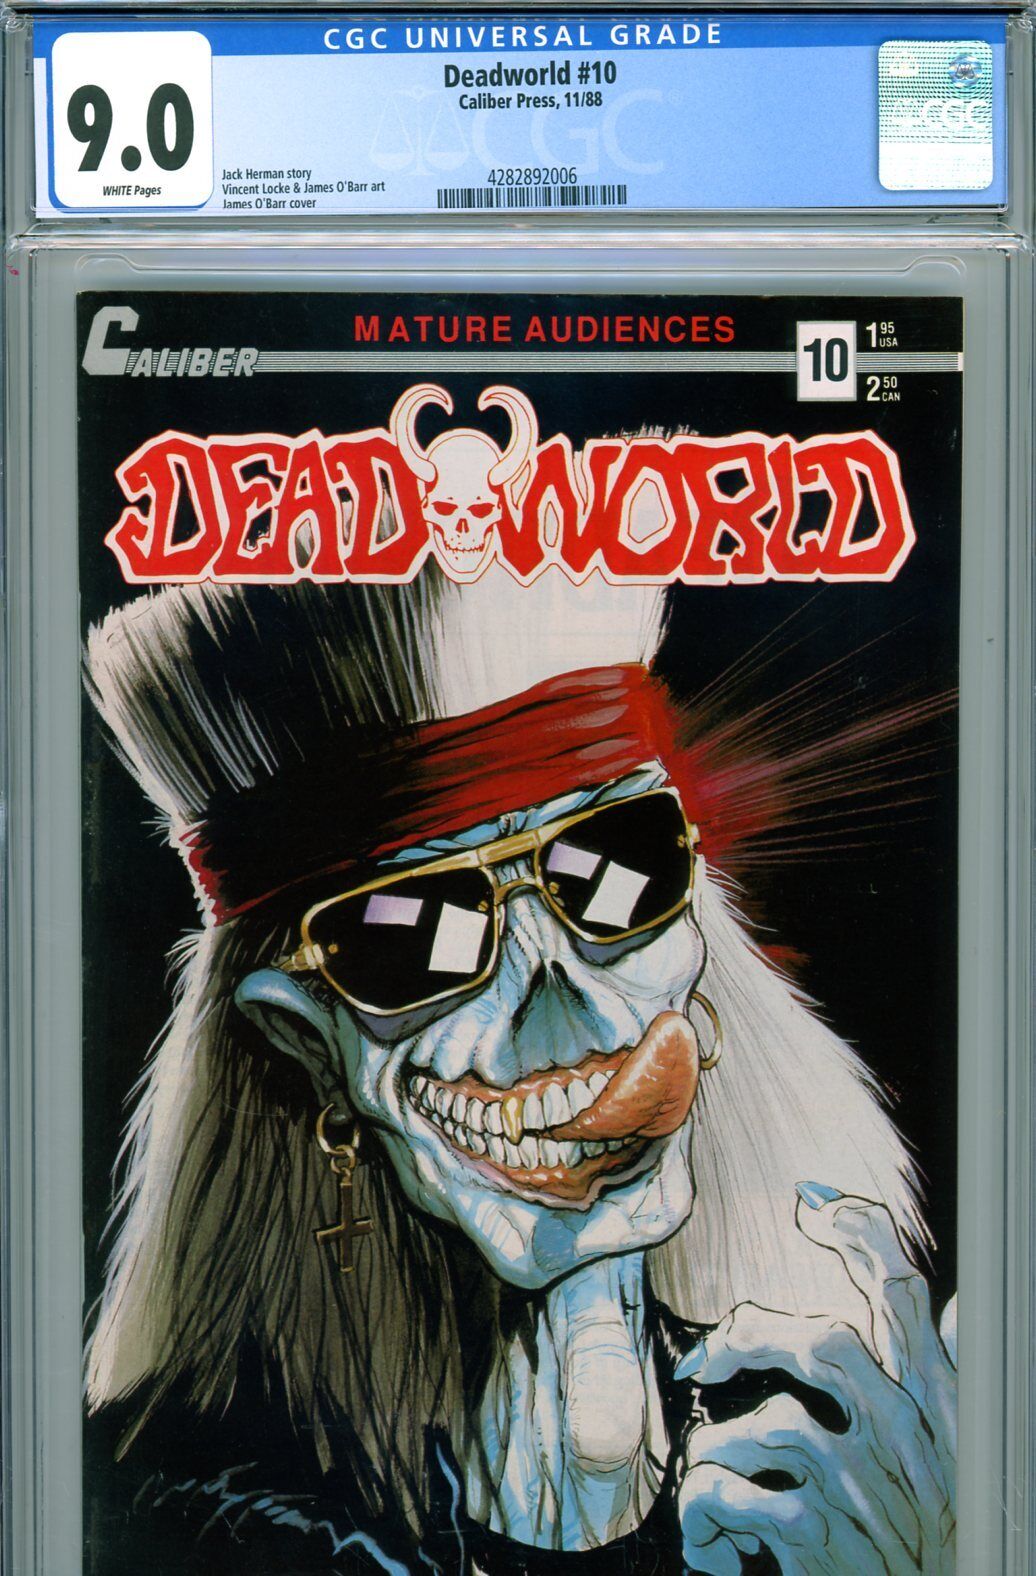 Deadworld #10 CGC GRADED 9.0 - O\'Barr art/cover - Herman story - Caliber Press